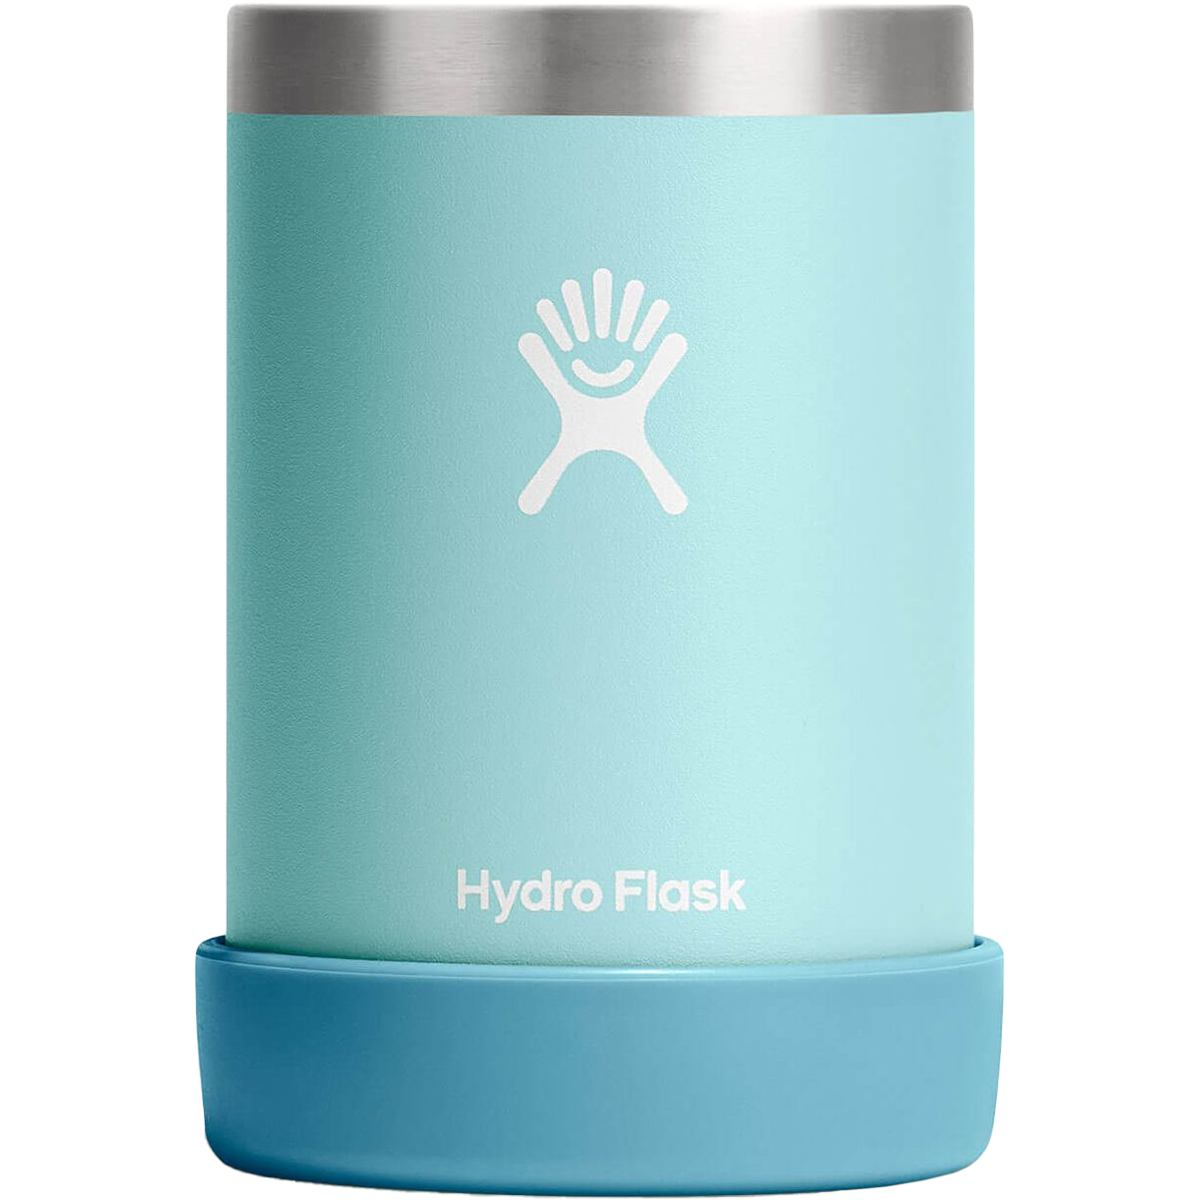 Hydro Flask 12 oz Insulated Coffee Mug, Cactus